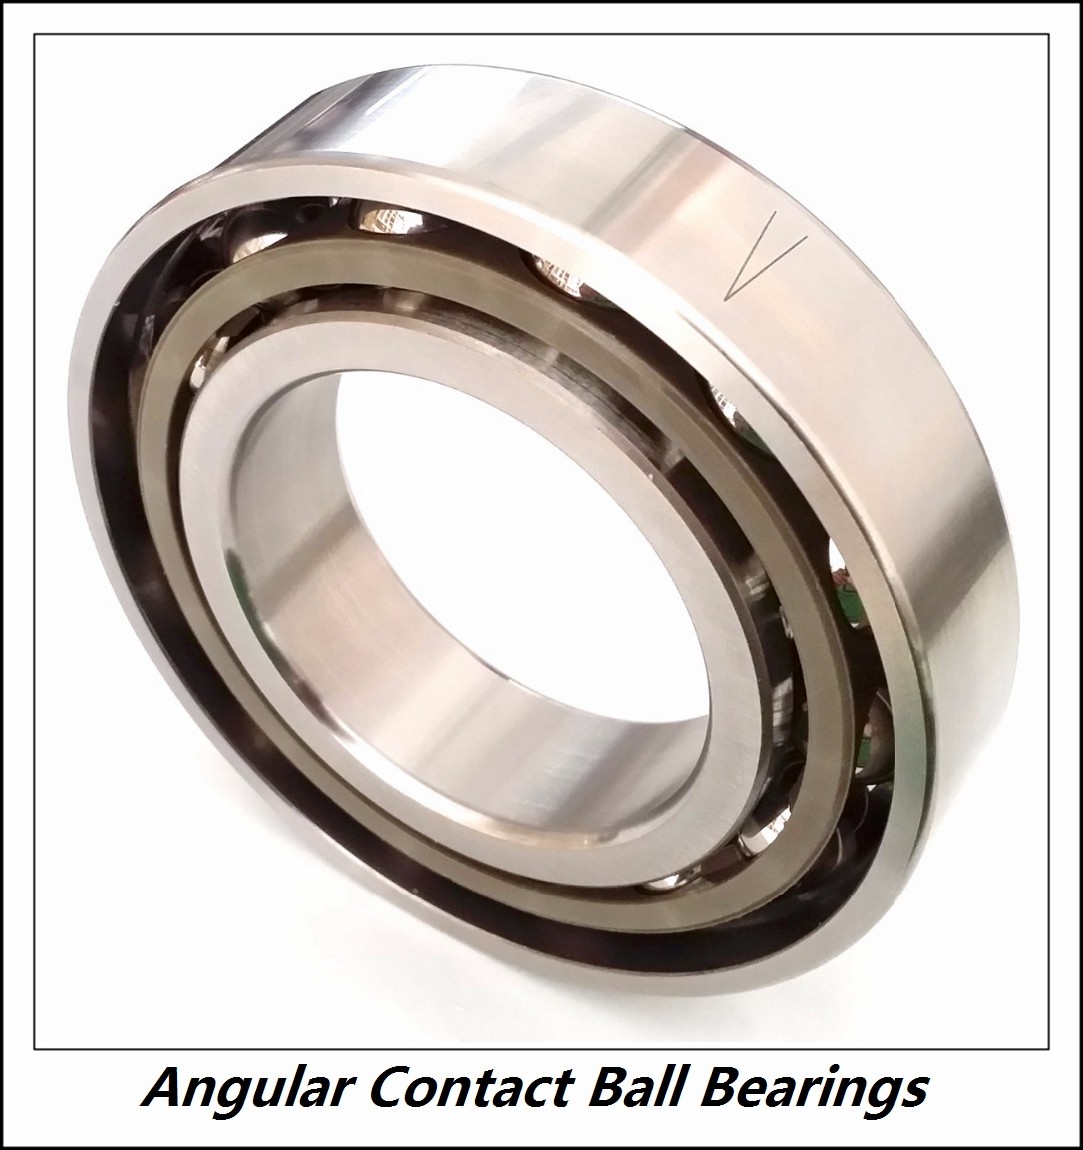 0.472 Inch | 12 Millimeter x 1.102 Inch | 28 Millimeter x 0.472 Inch | 12 Millimeter  INA 3001-B-2RS-TVH-G8  Angular Contact Ball Bearings